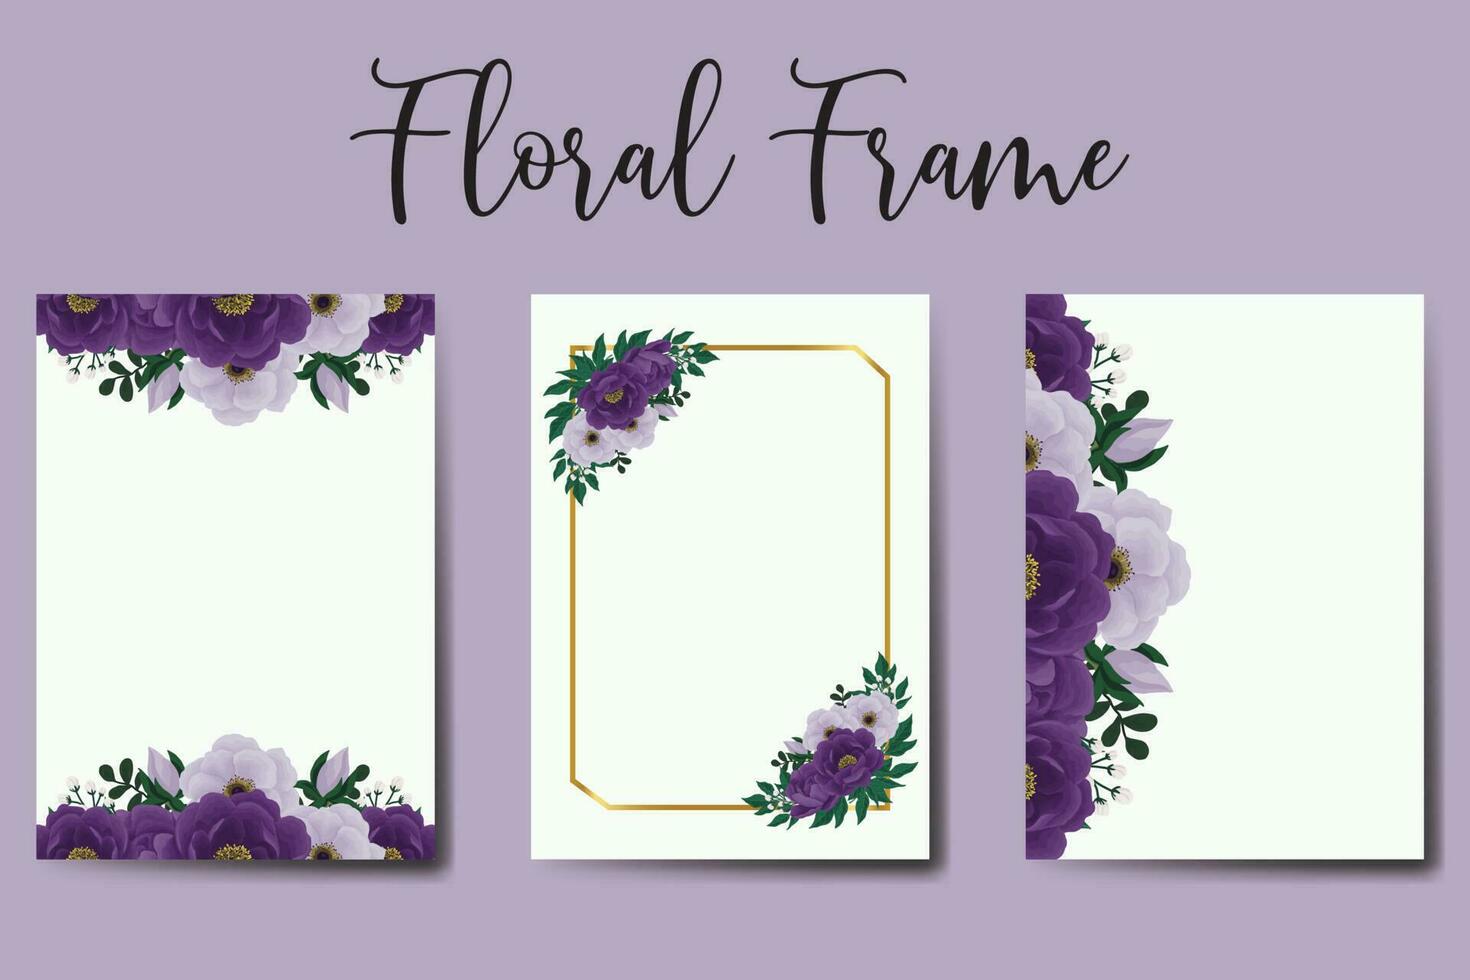 bruiloft uitnodiging frame set, bloemen aquarel digitale hand getekende paarse pioen bloem ontwerp uitnodiging kaartsjabloon vector